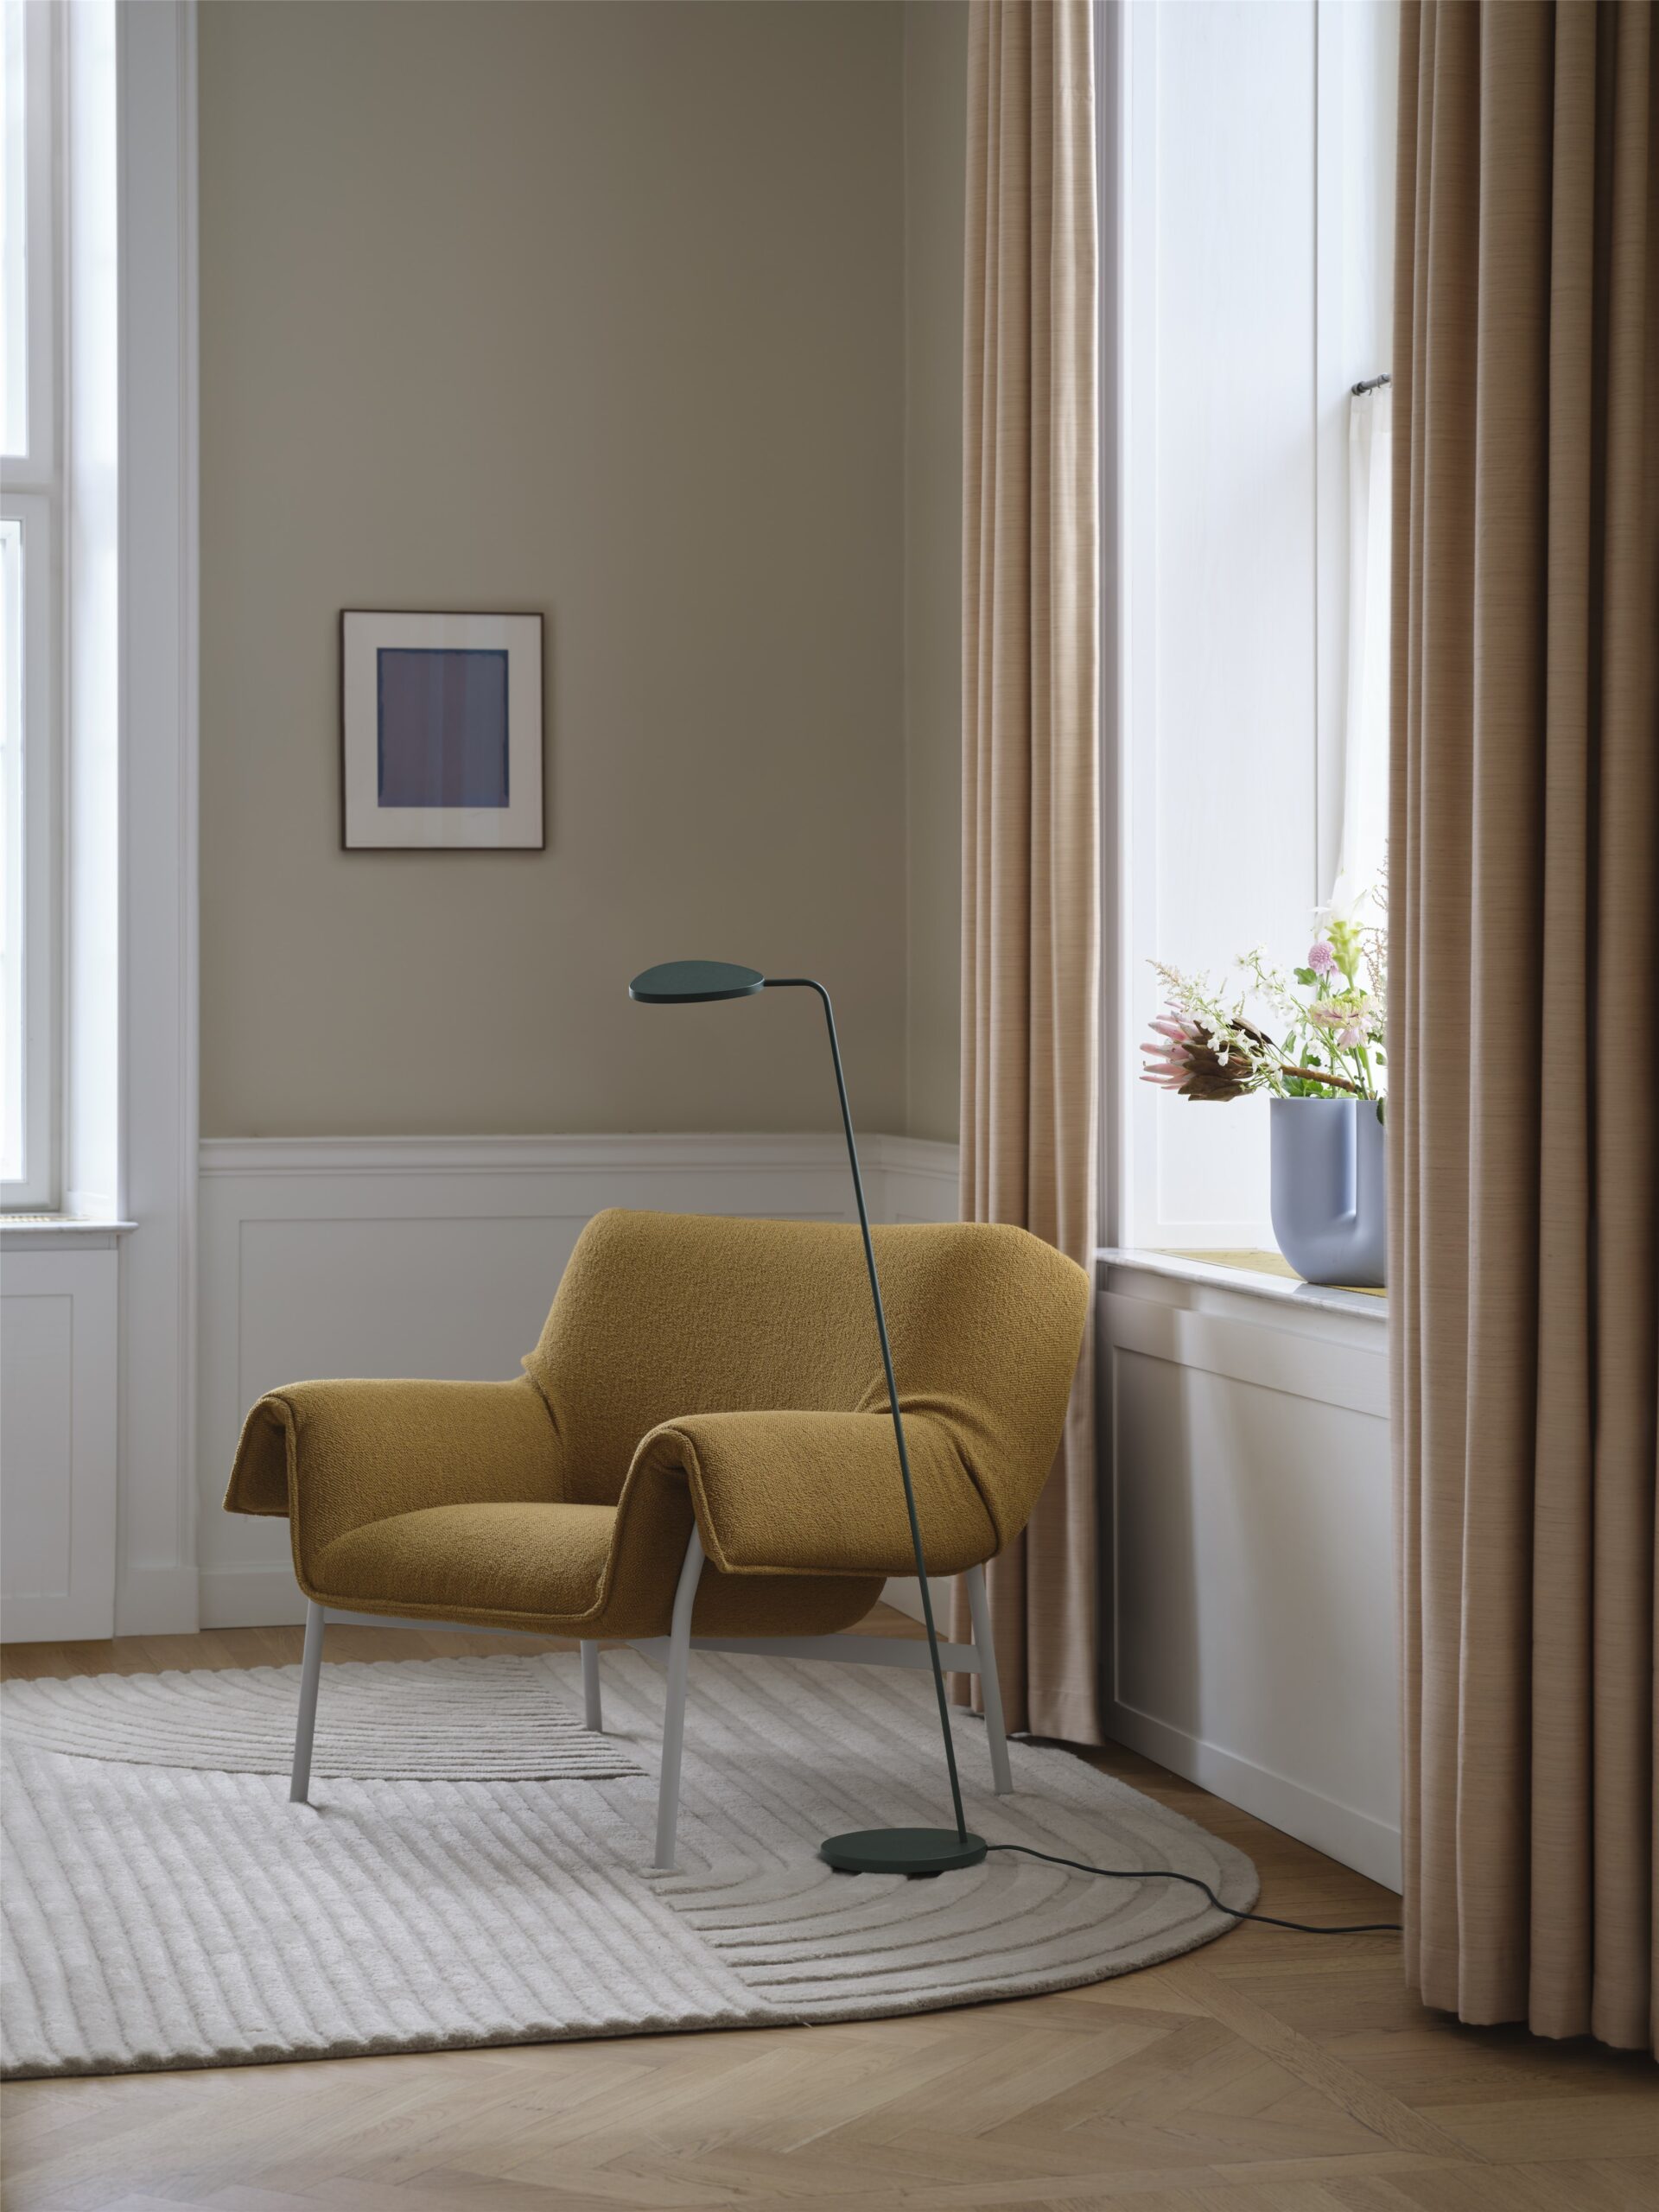 Wrap Lounge Chair, Relevo Rug 170 x 240cm, Leaf floor lamp. As seen